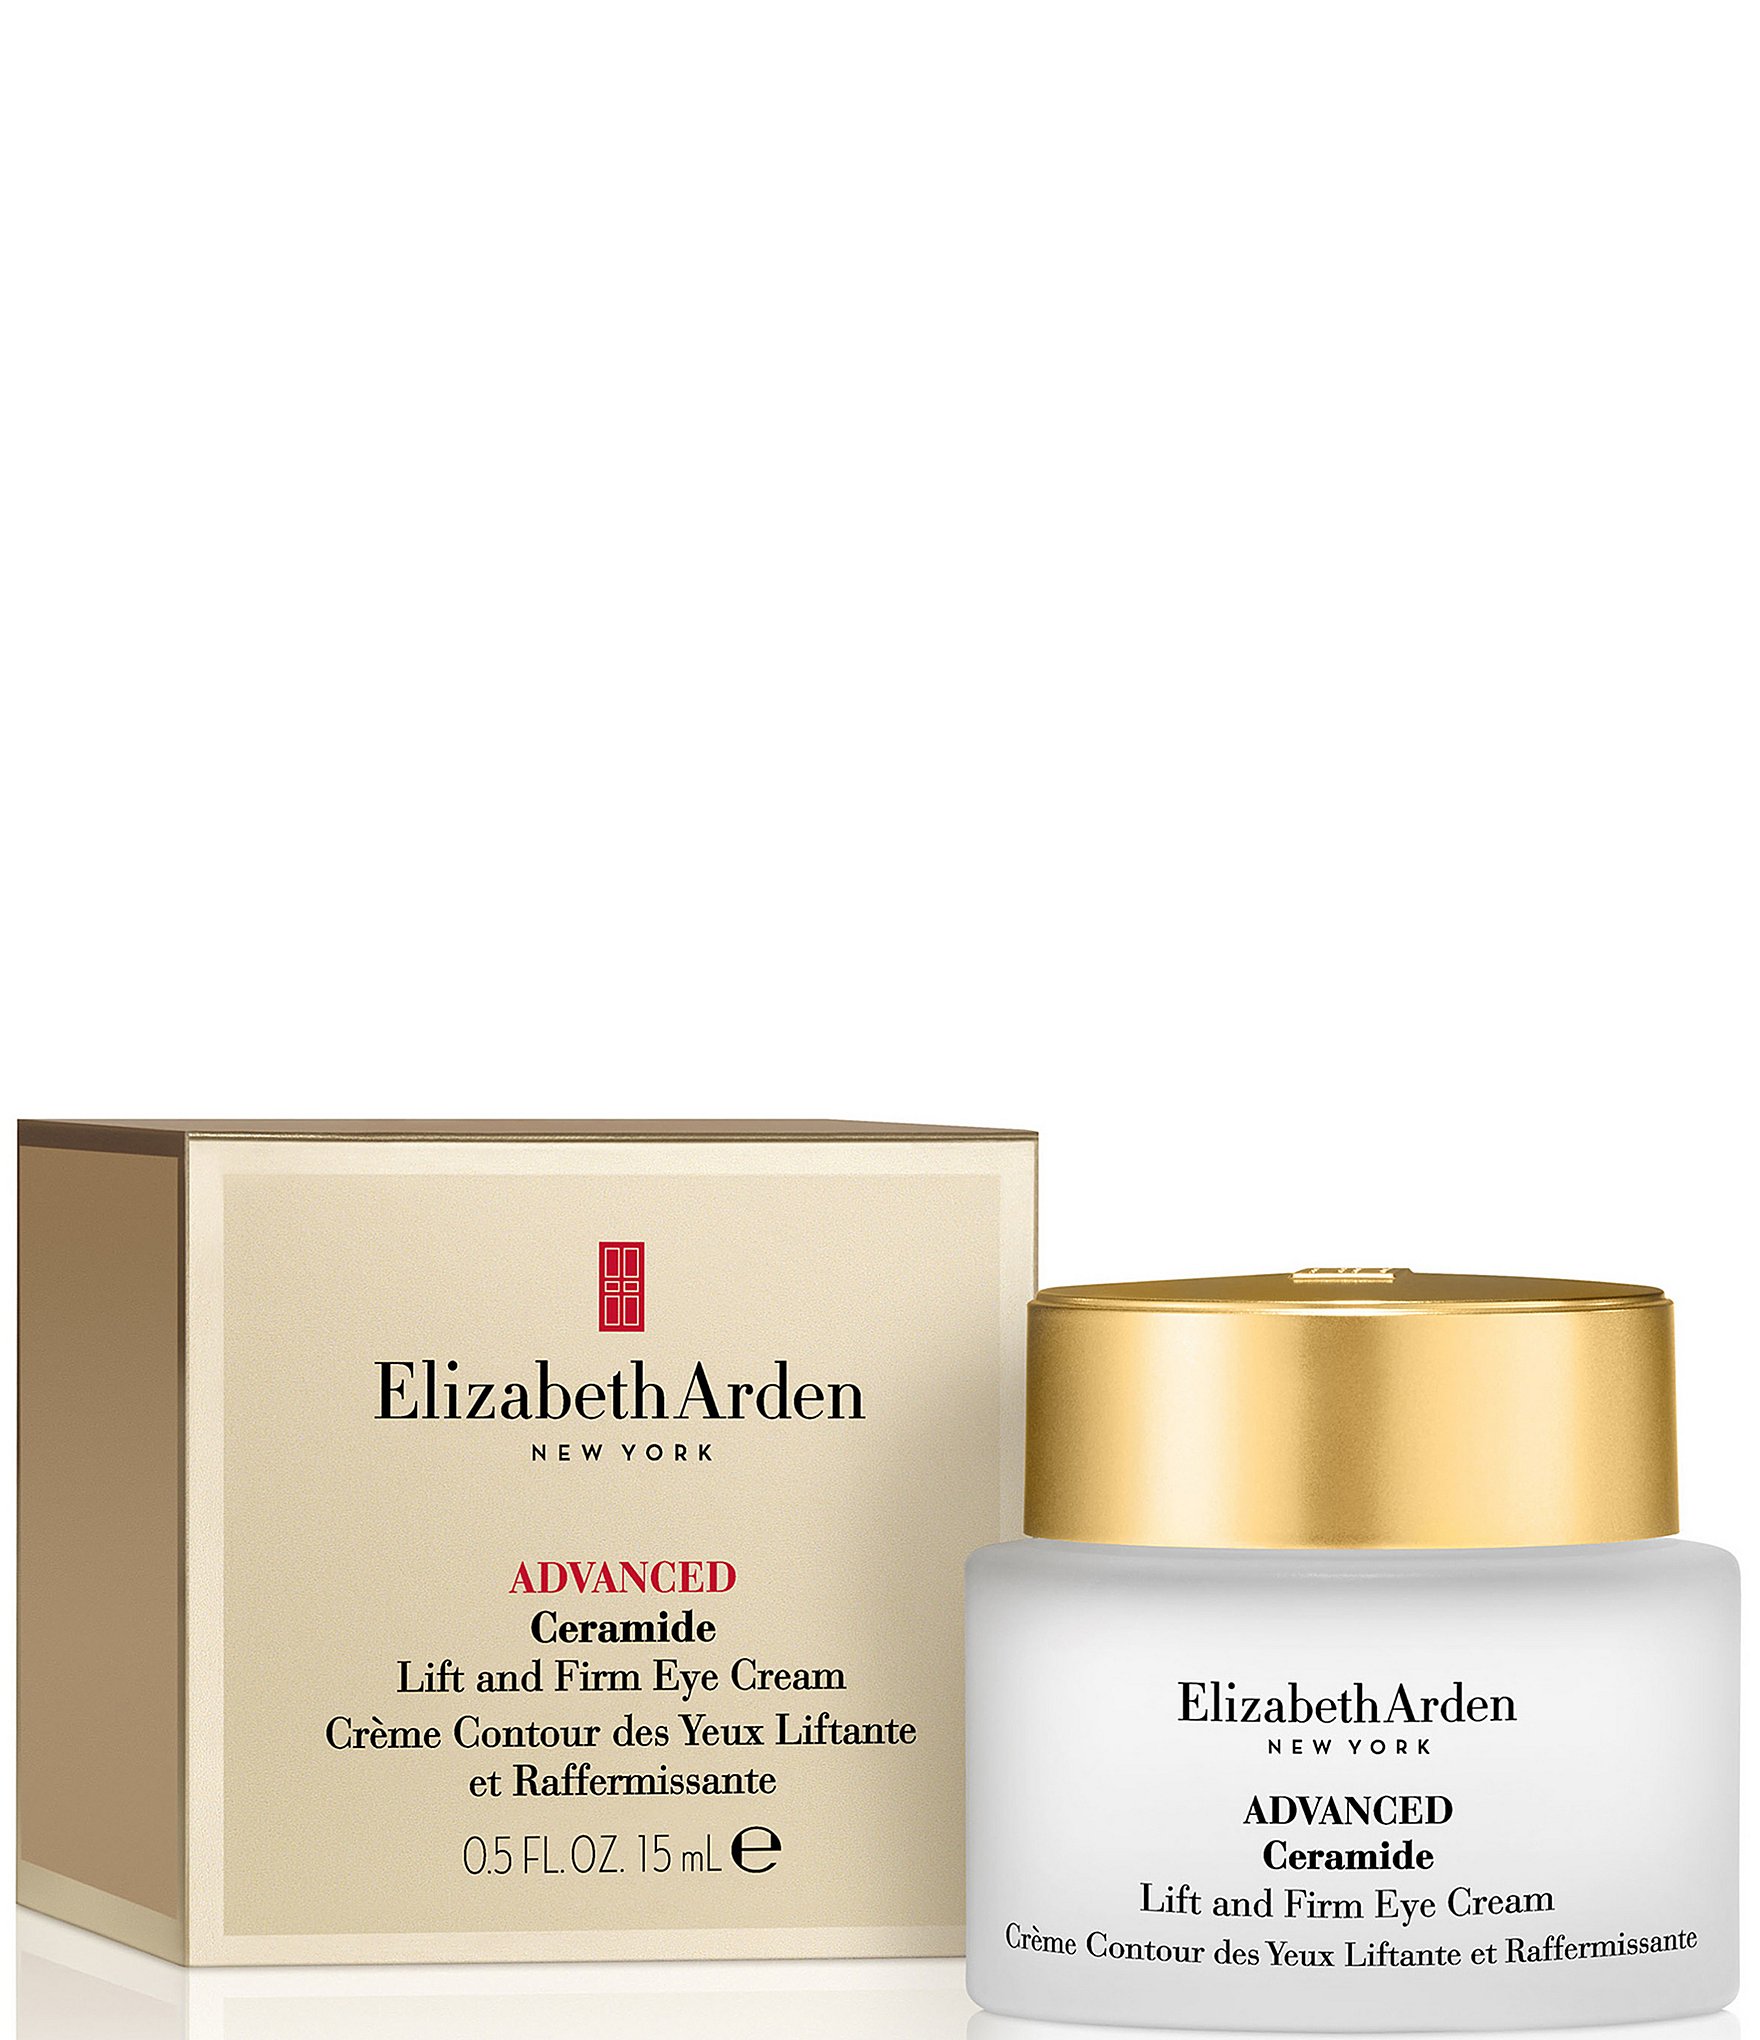 Elizabeth Arden Advanced Ceramide Lift and Firm Eye Cream Dillard's